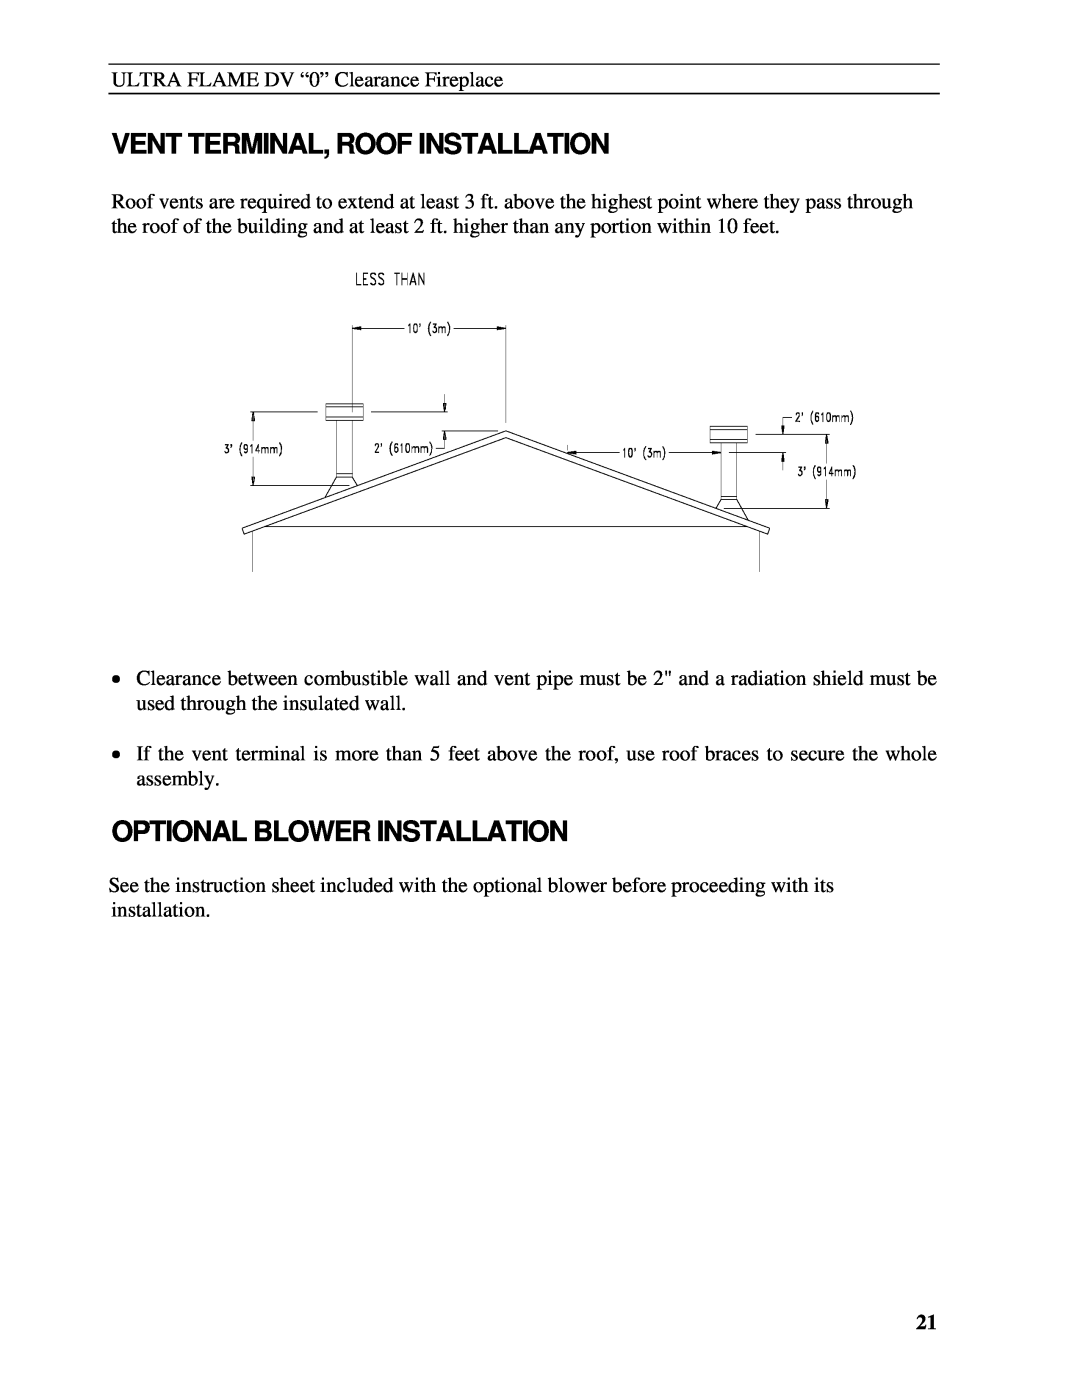 Drolet DG05437/DG05447 manual Vent Terminal, Roof Installation, Optional Blower Installation 